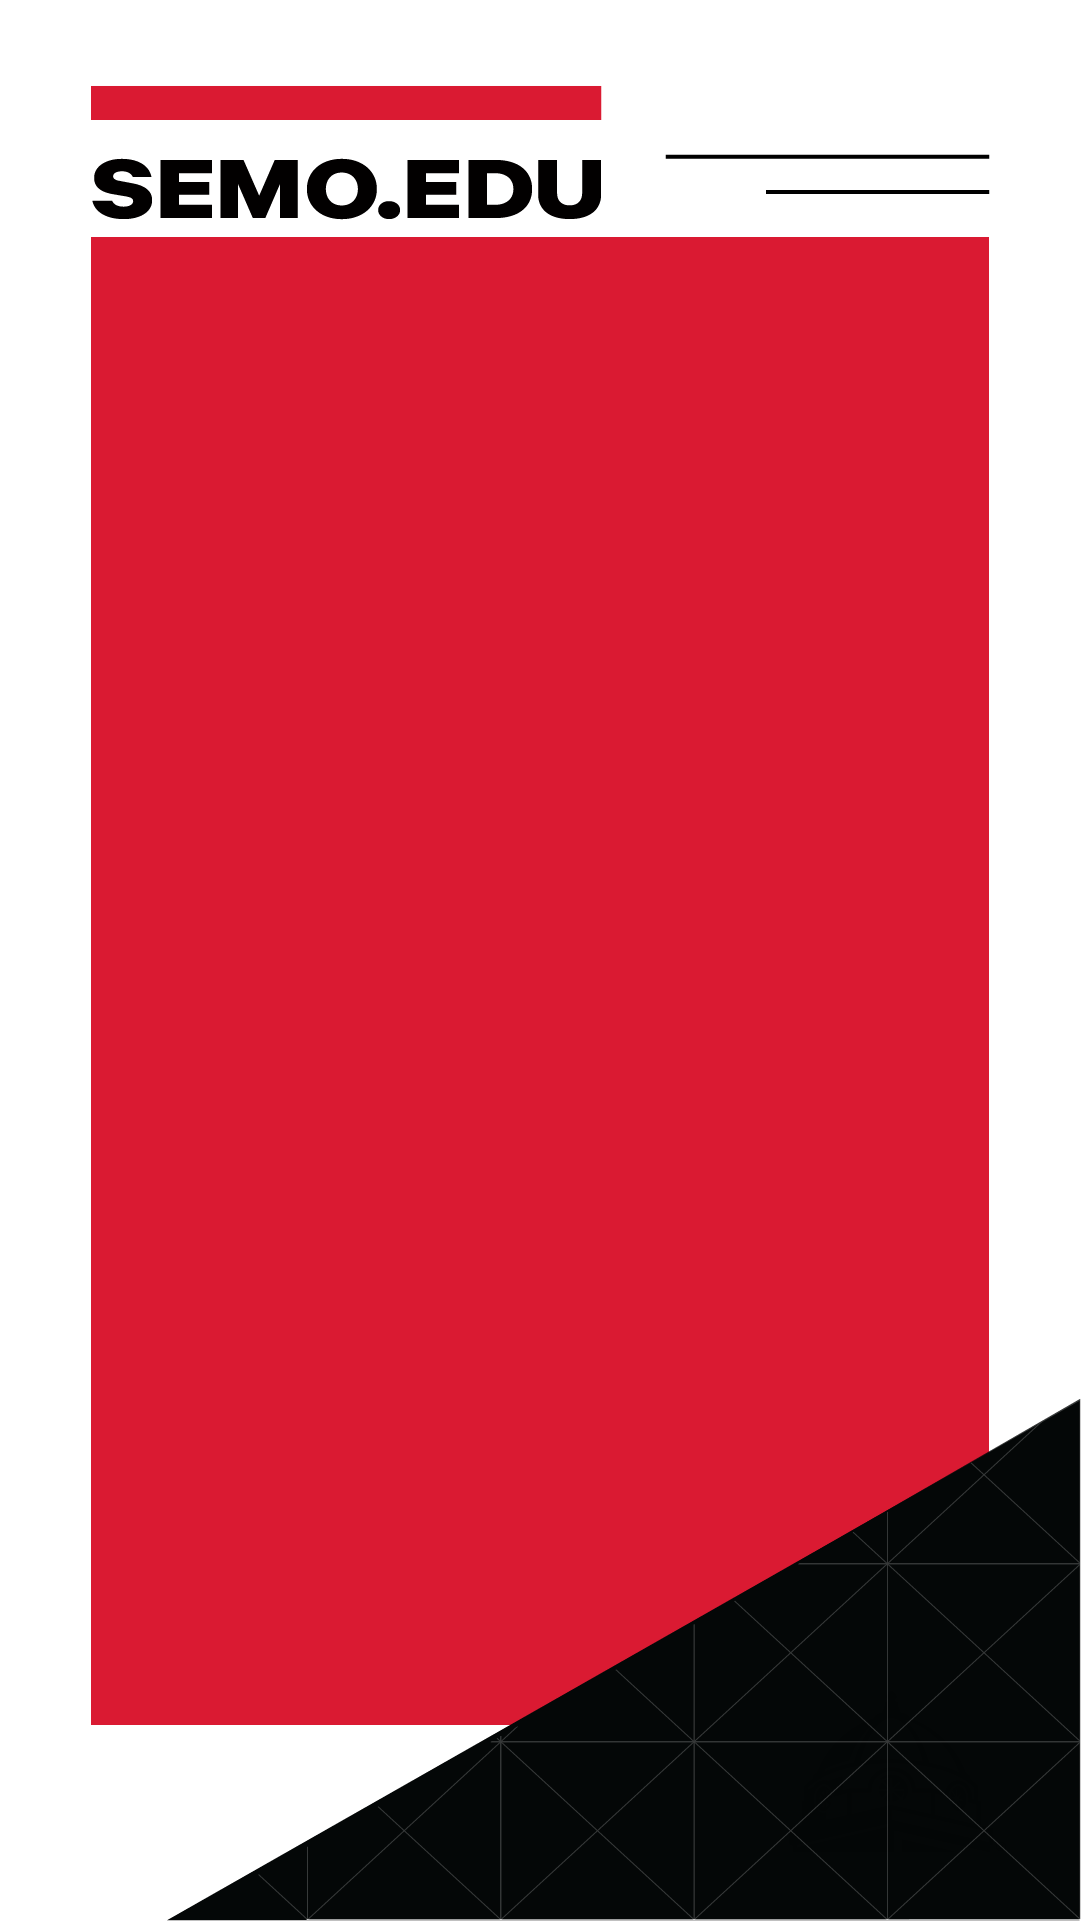 "semo.edu" in top left corner, blank red box background, white border, black triangle in bottom right corner